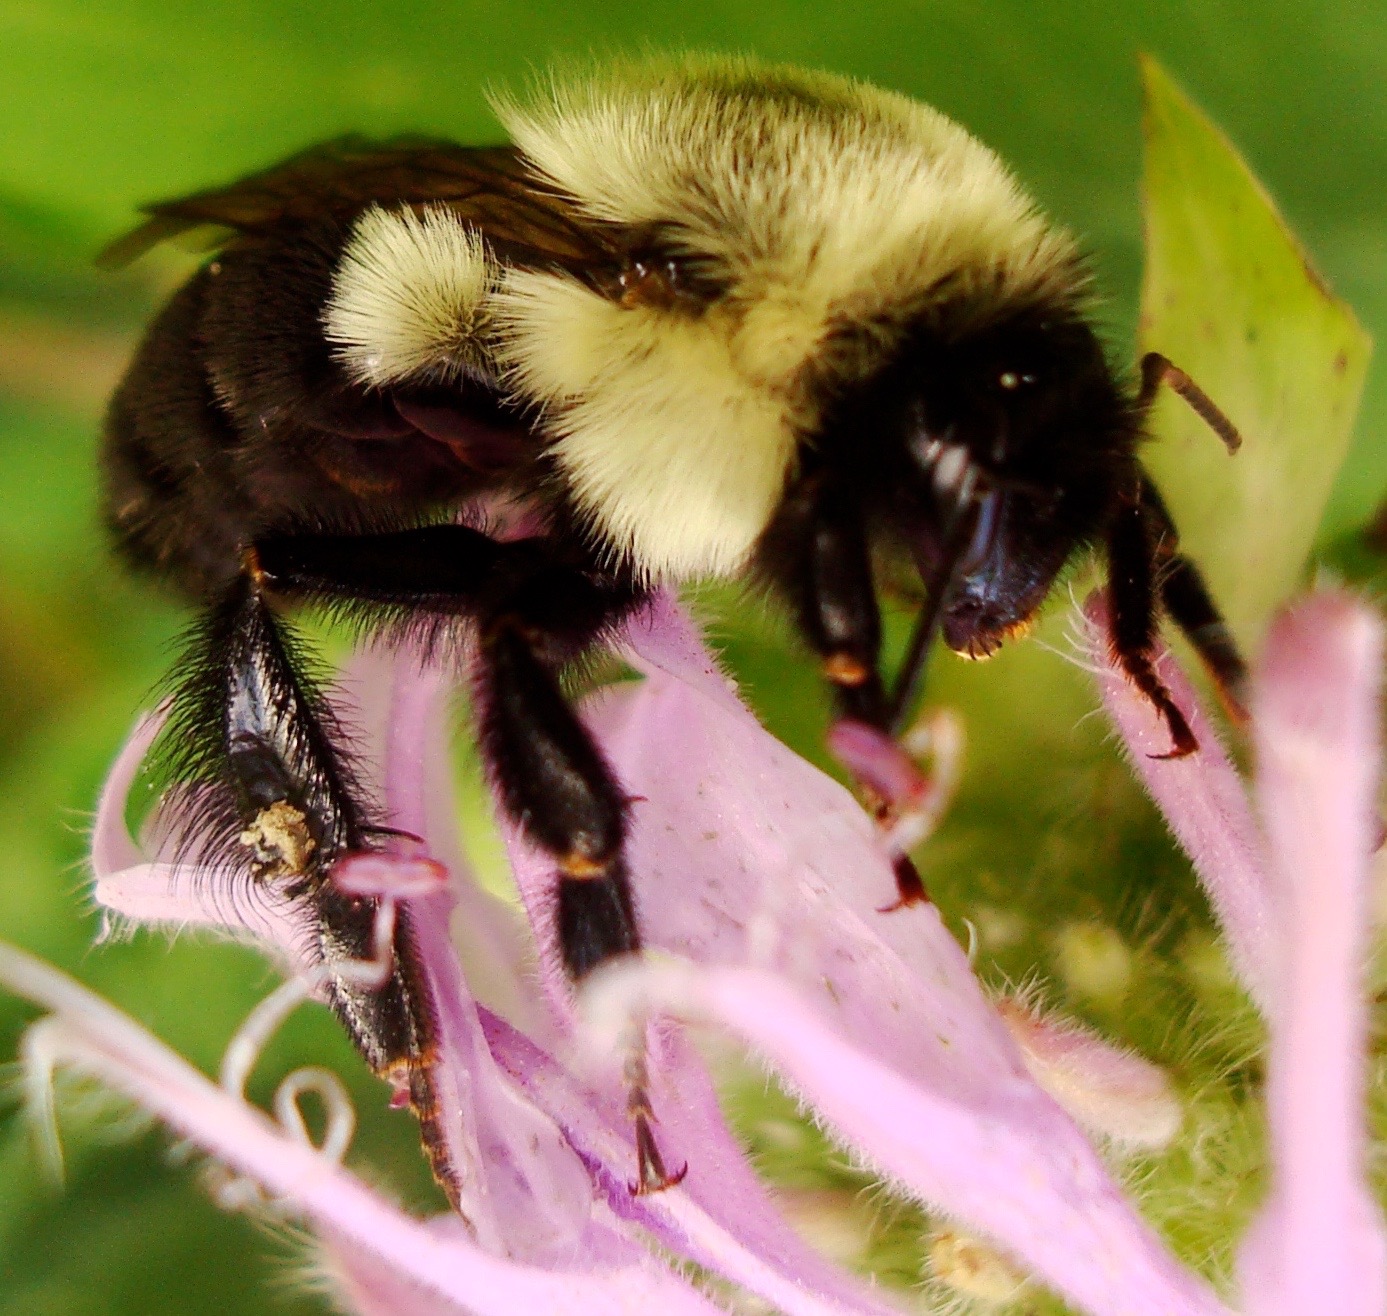 A bumblebee pollinates a flower.